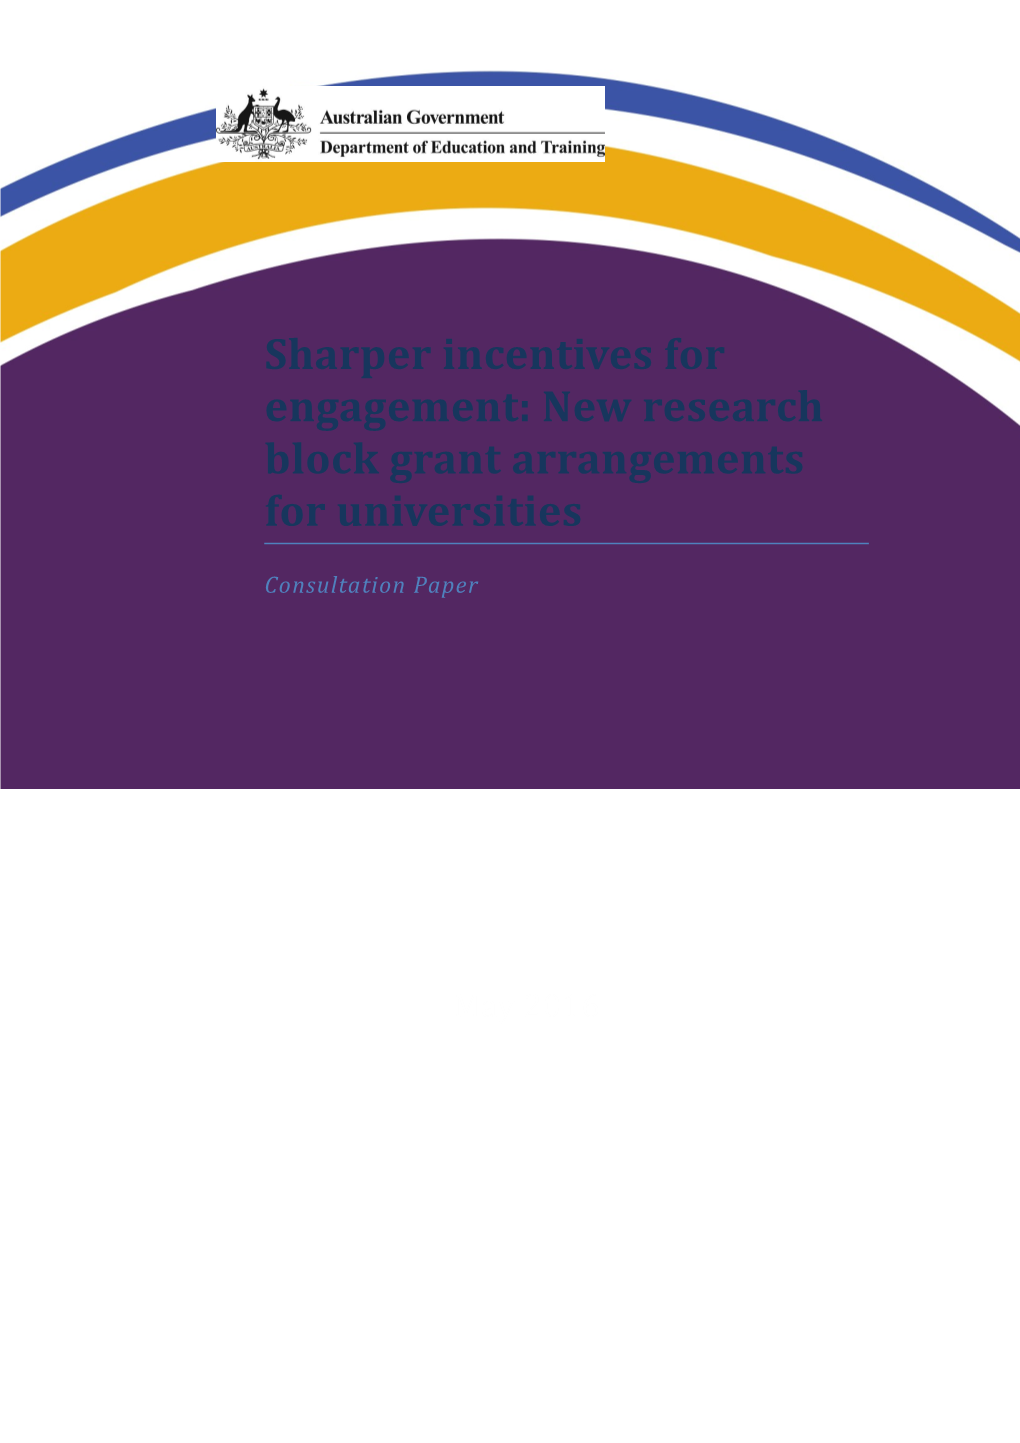 Consultation Paper - Sharper Incentives for Engagement: New Research Block Grants Arrangements